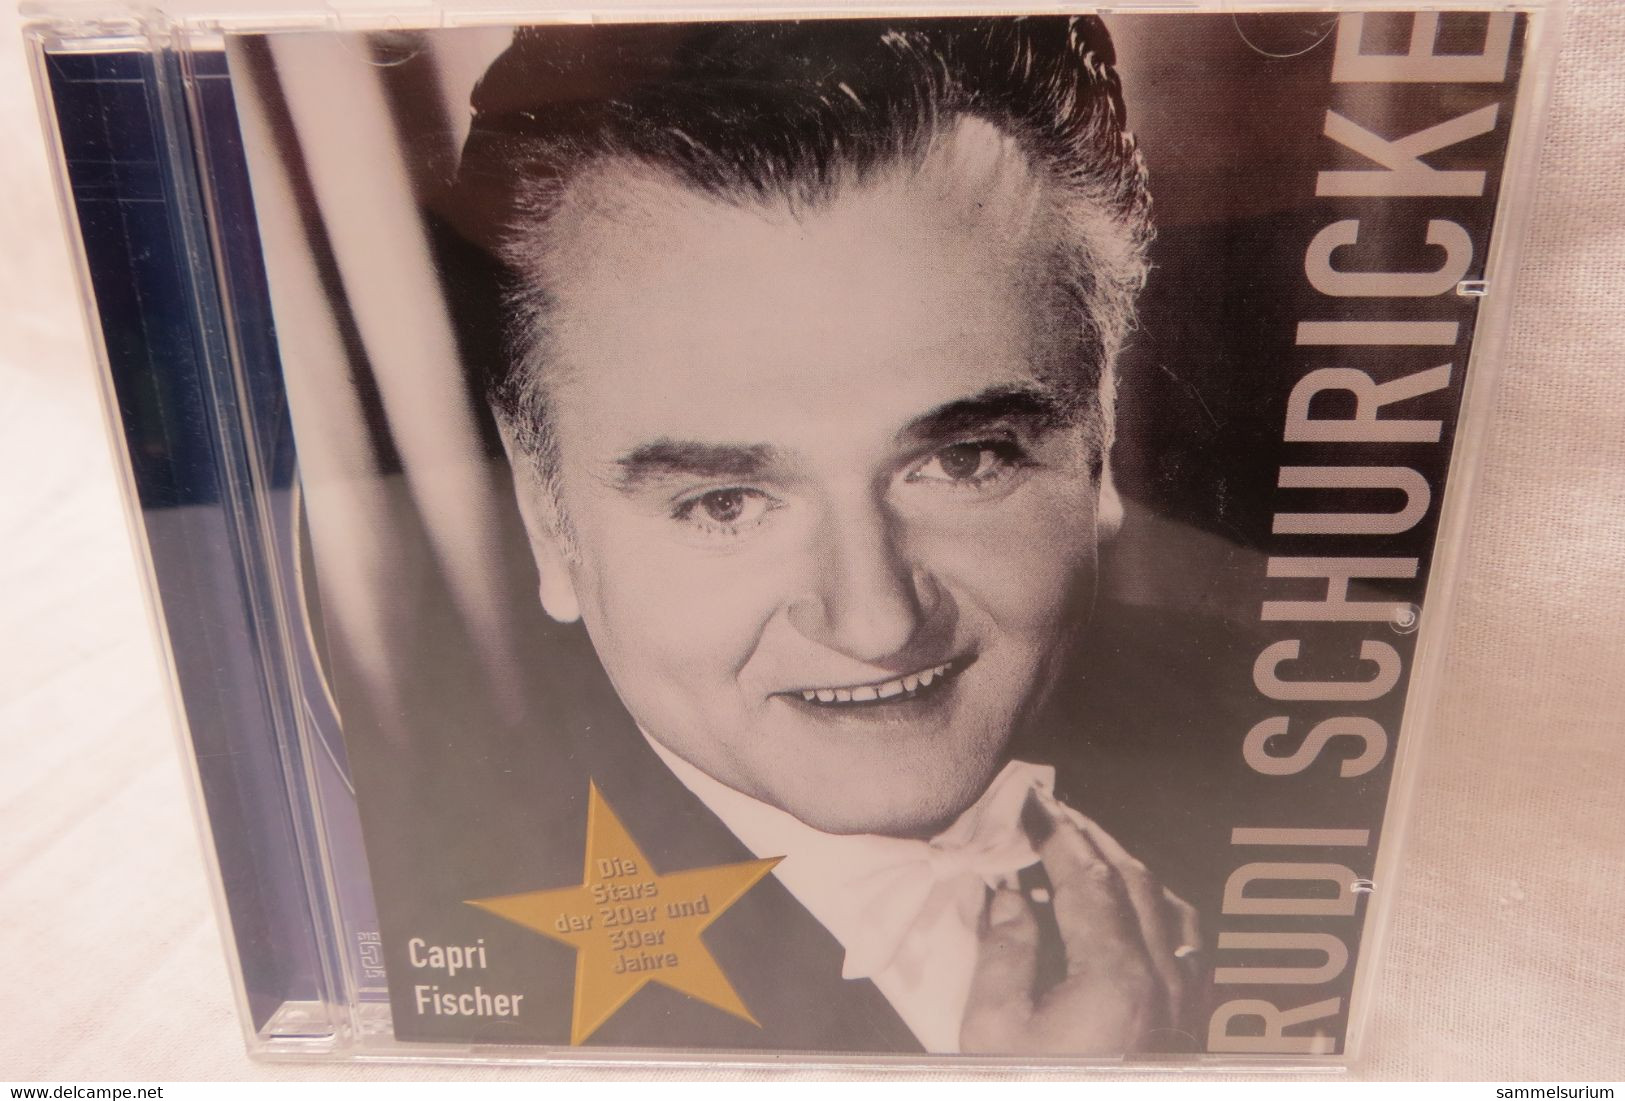 CD "Rudi Schuricke" Capri Fischer - Other - German Music